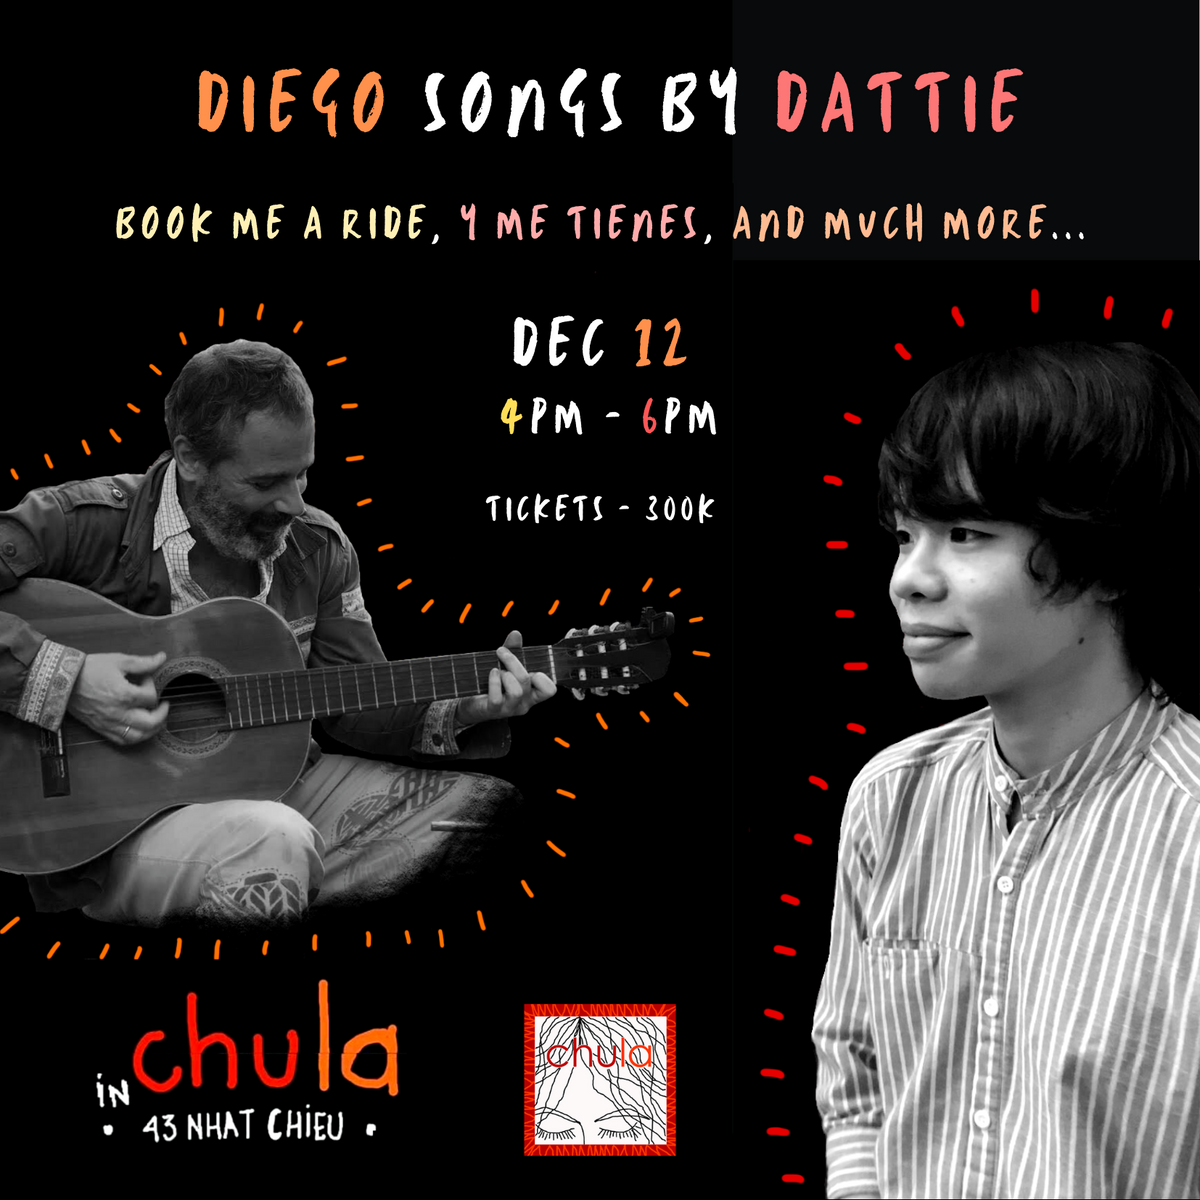 Dec 12 - Diego songs by Dattie